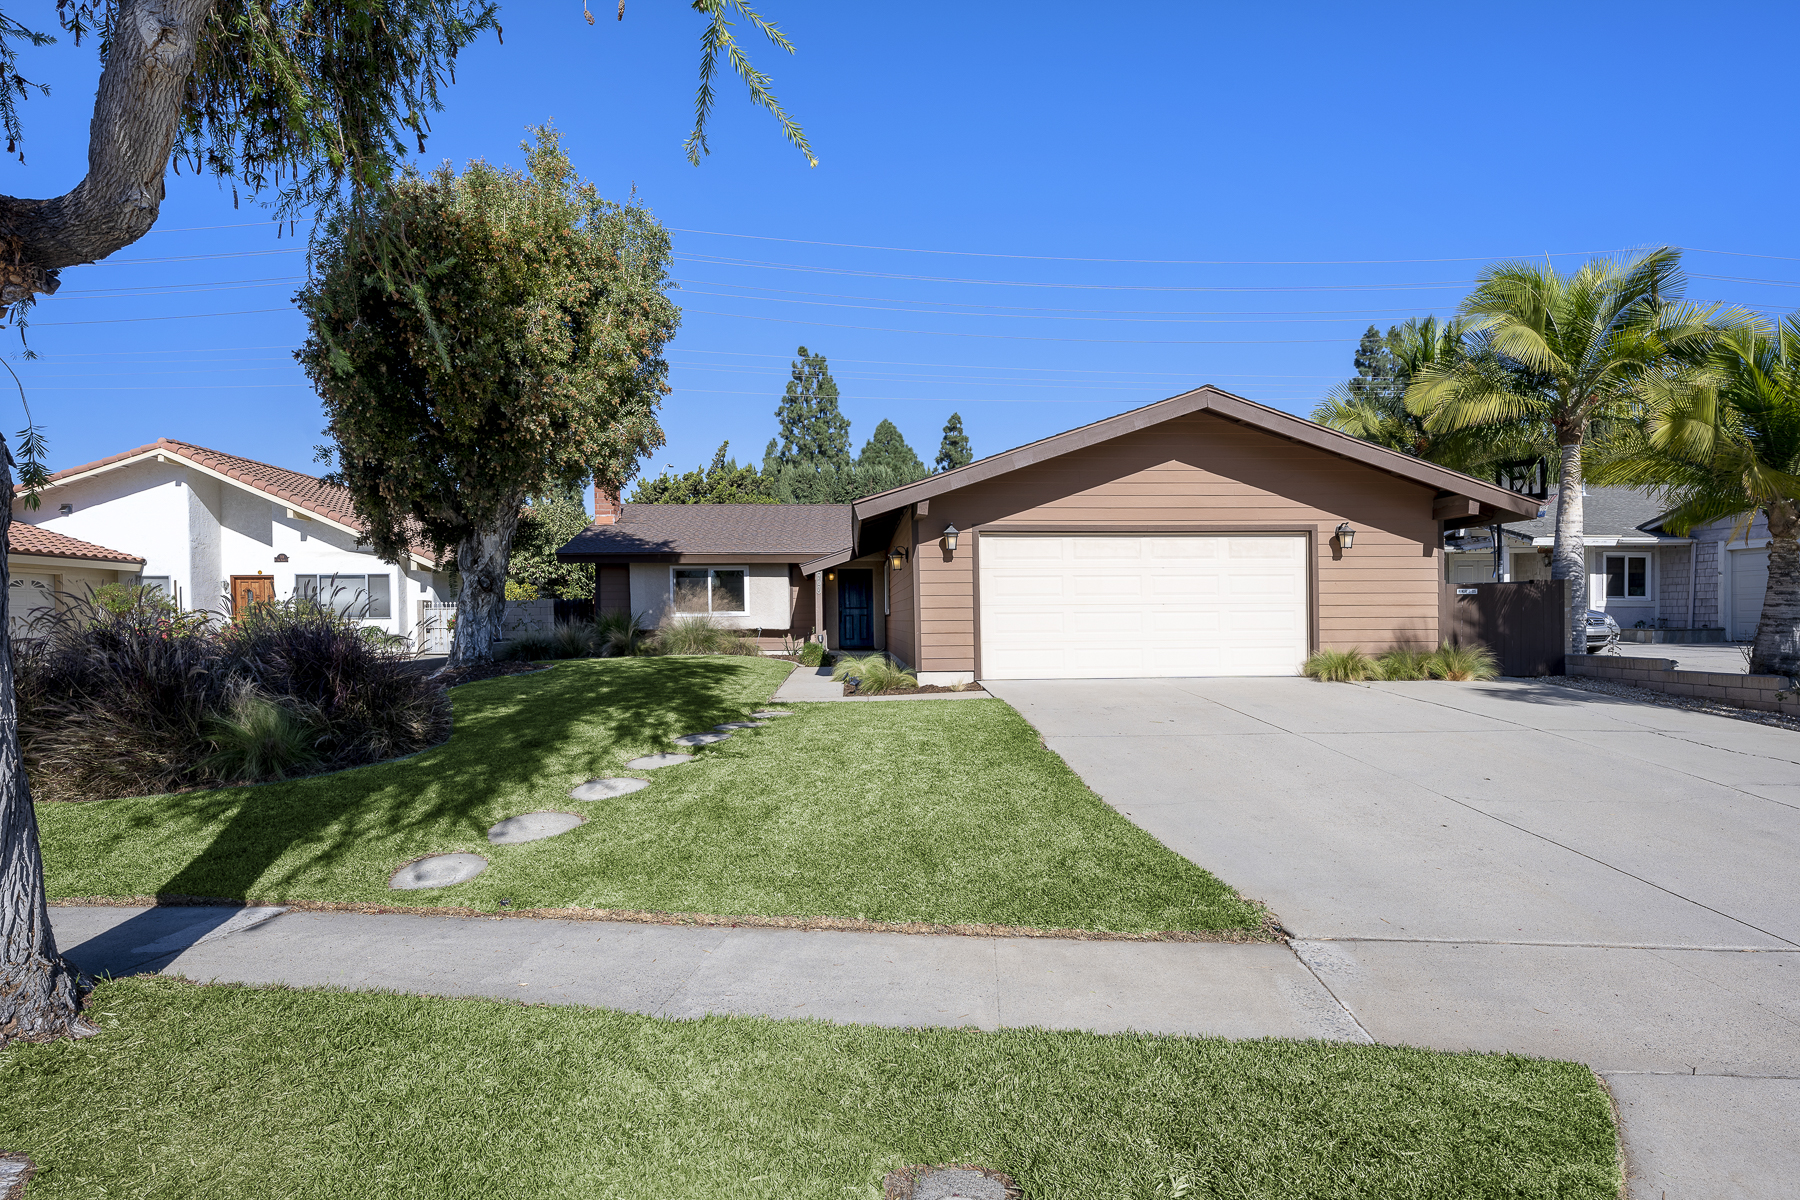 Fullerton Single Level Cul-De-Sac Home – 707 San Ramon Drive, Fullerton, CA 92835 - House Front Street View